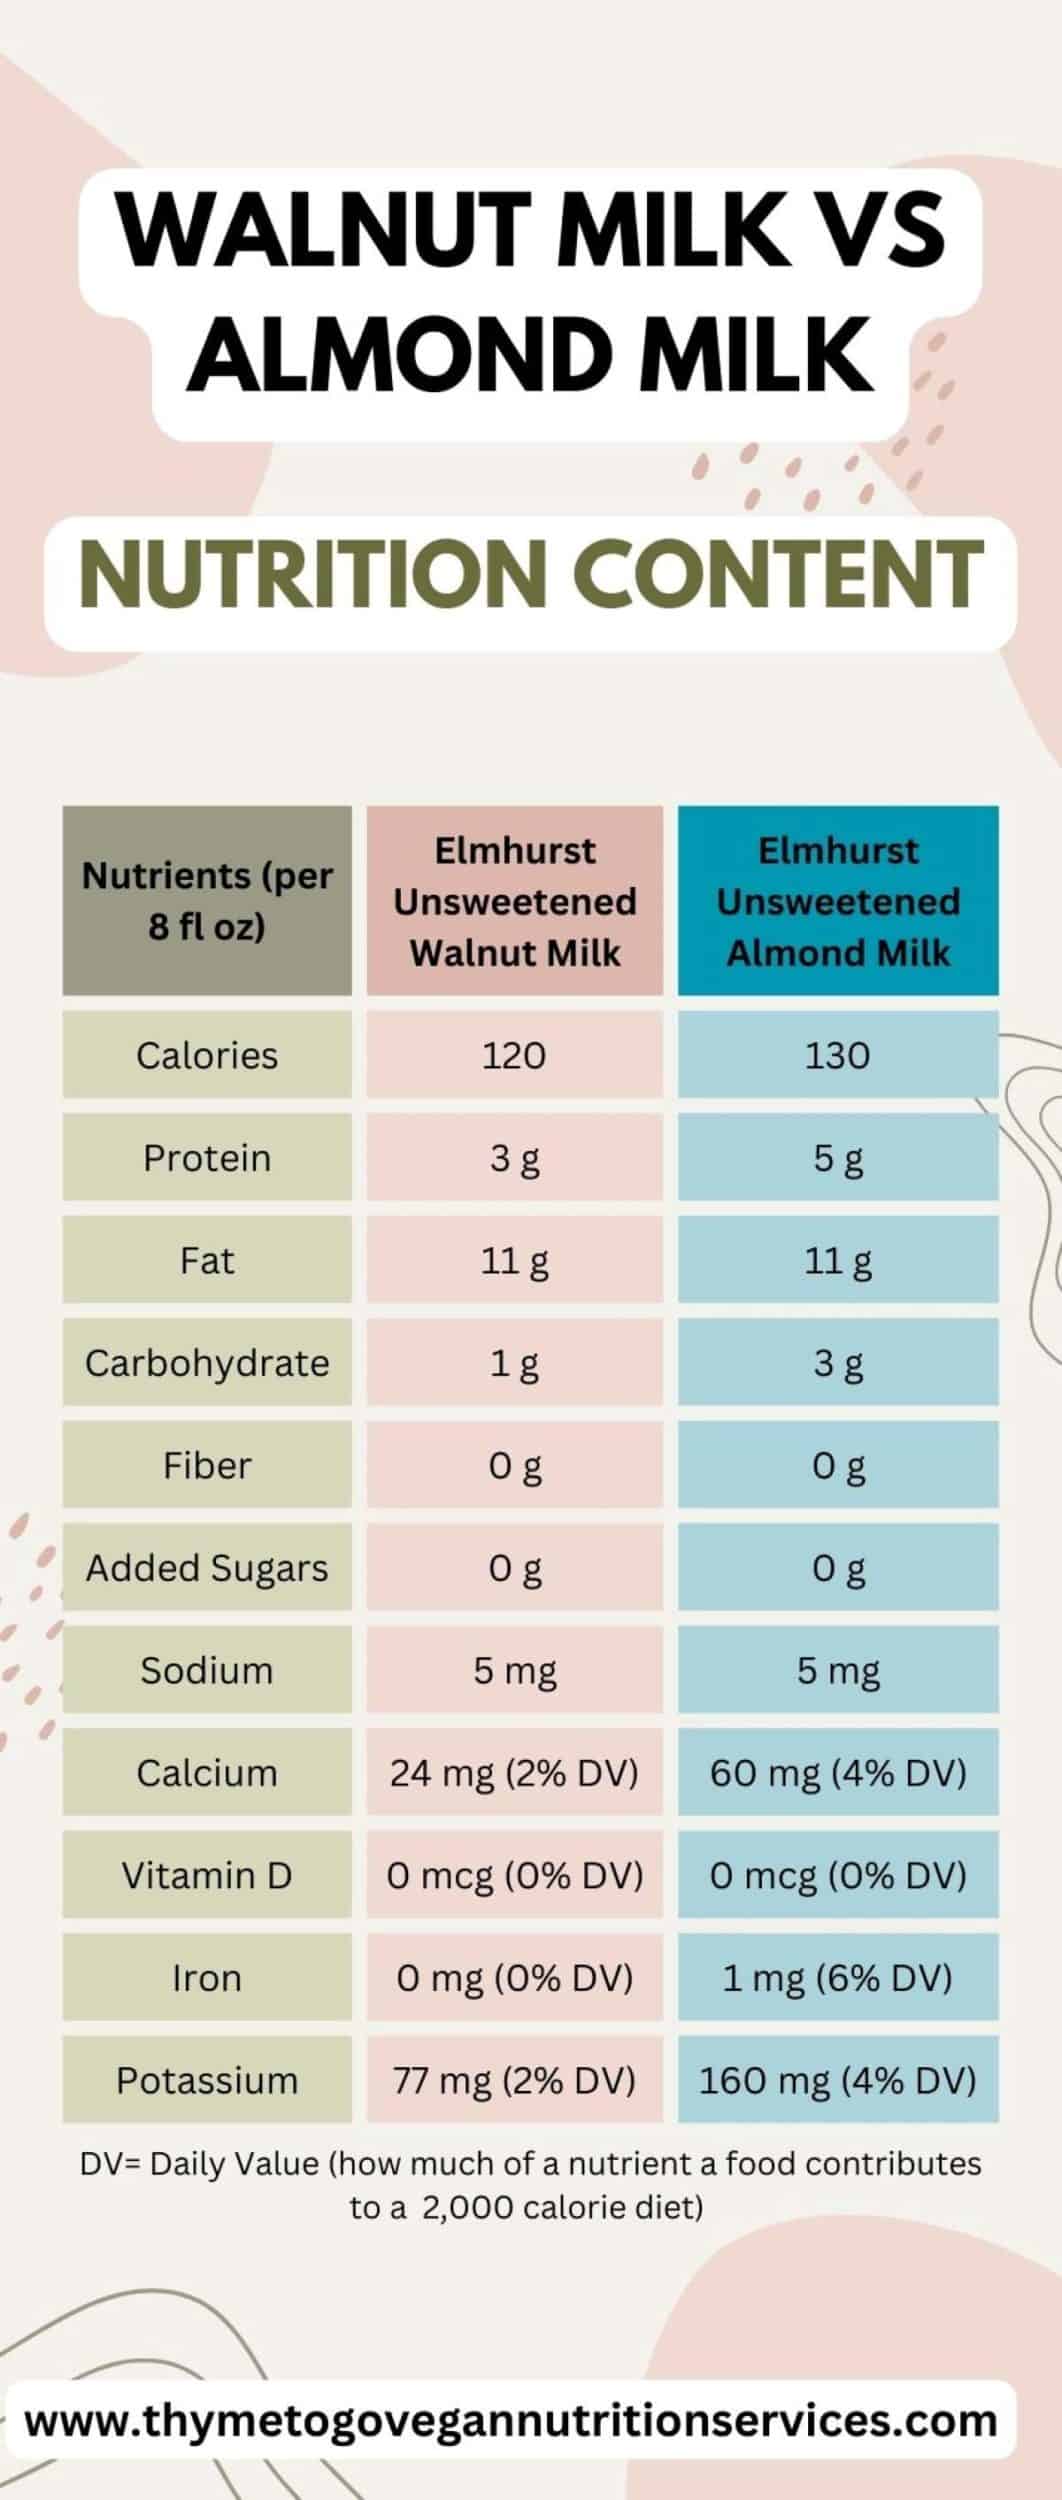 Chart comparing the nutrition content of walnut milk vs almond milk